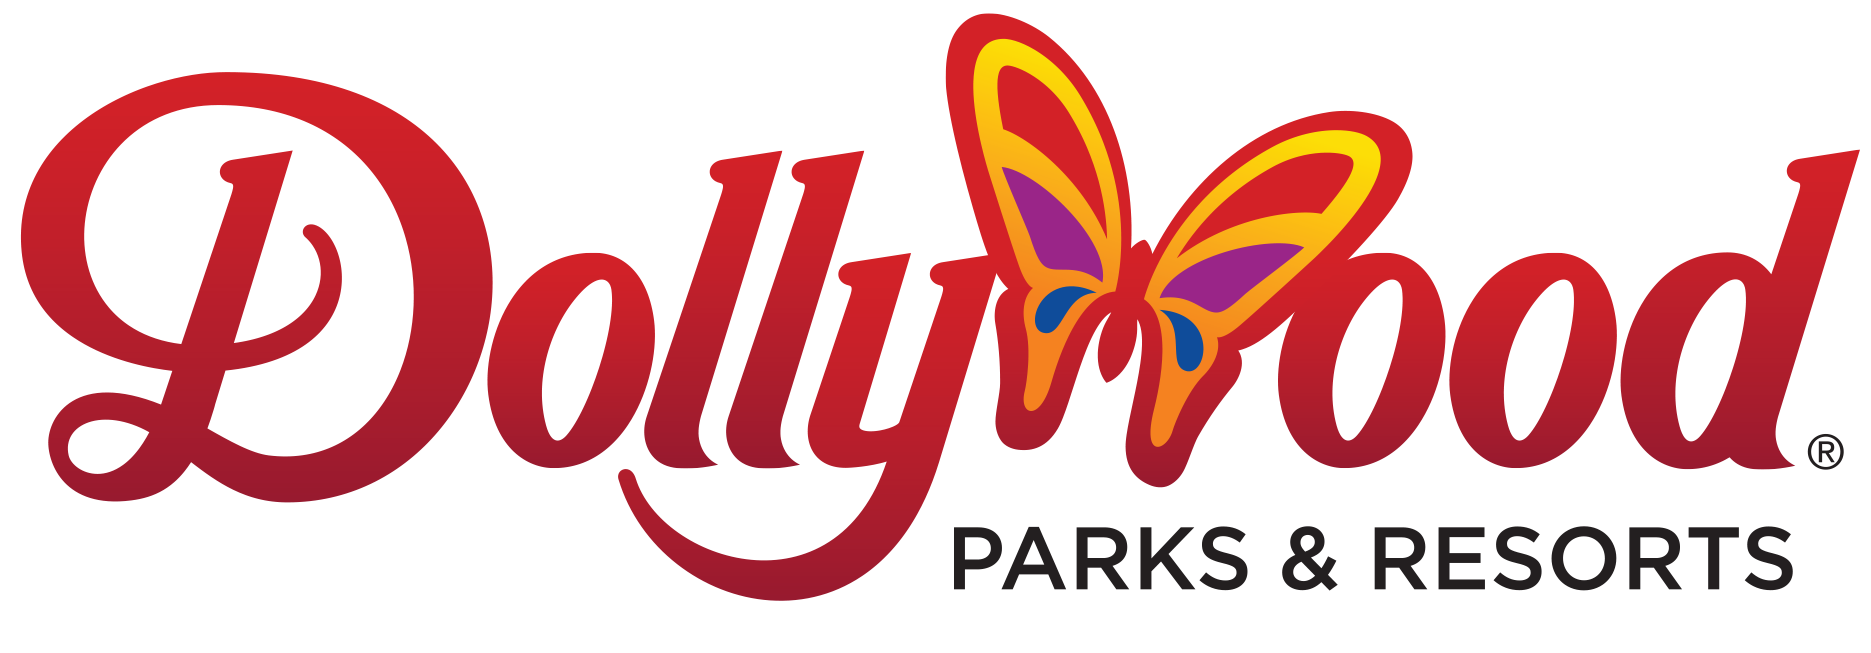 Dollywood Parks & Resorts logo